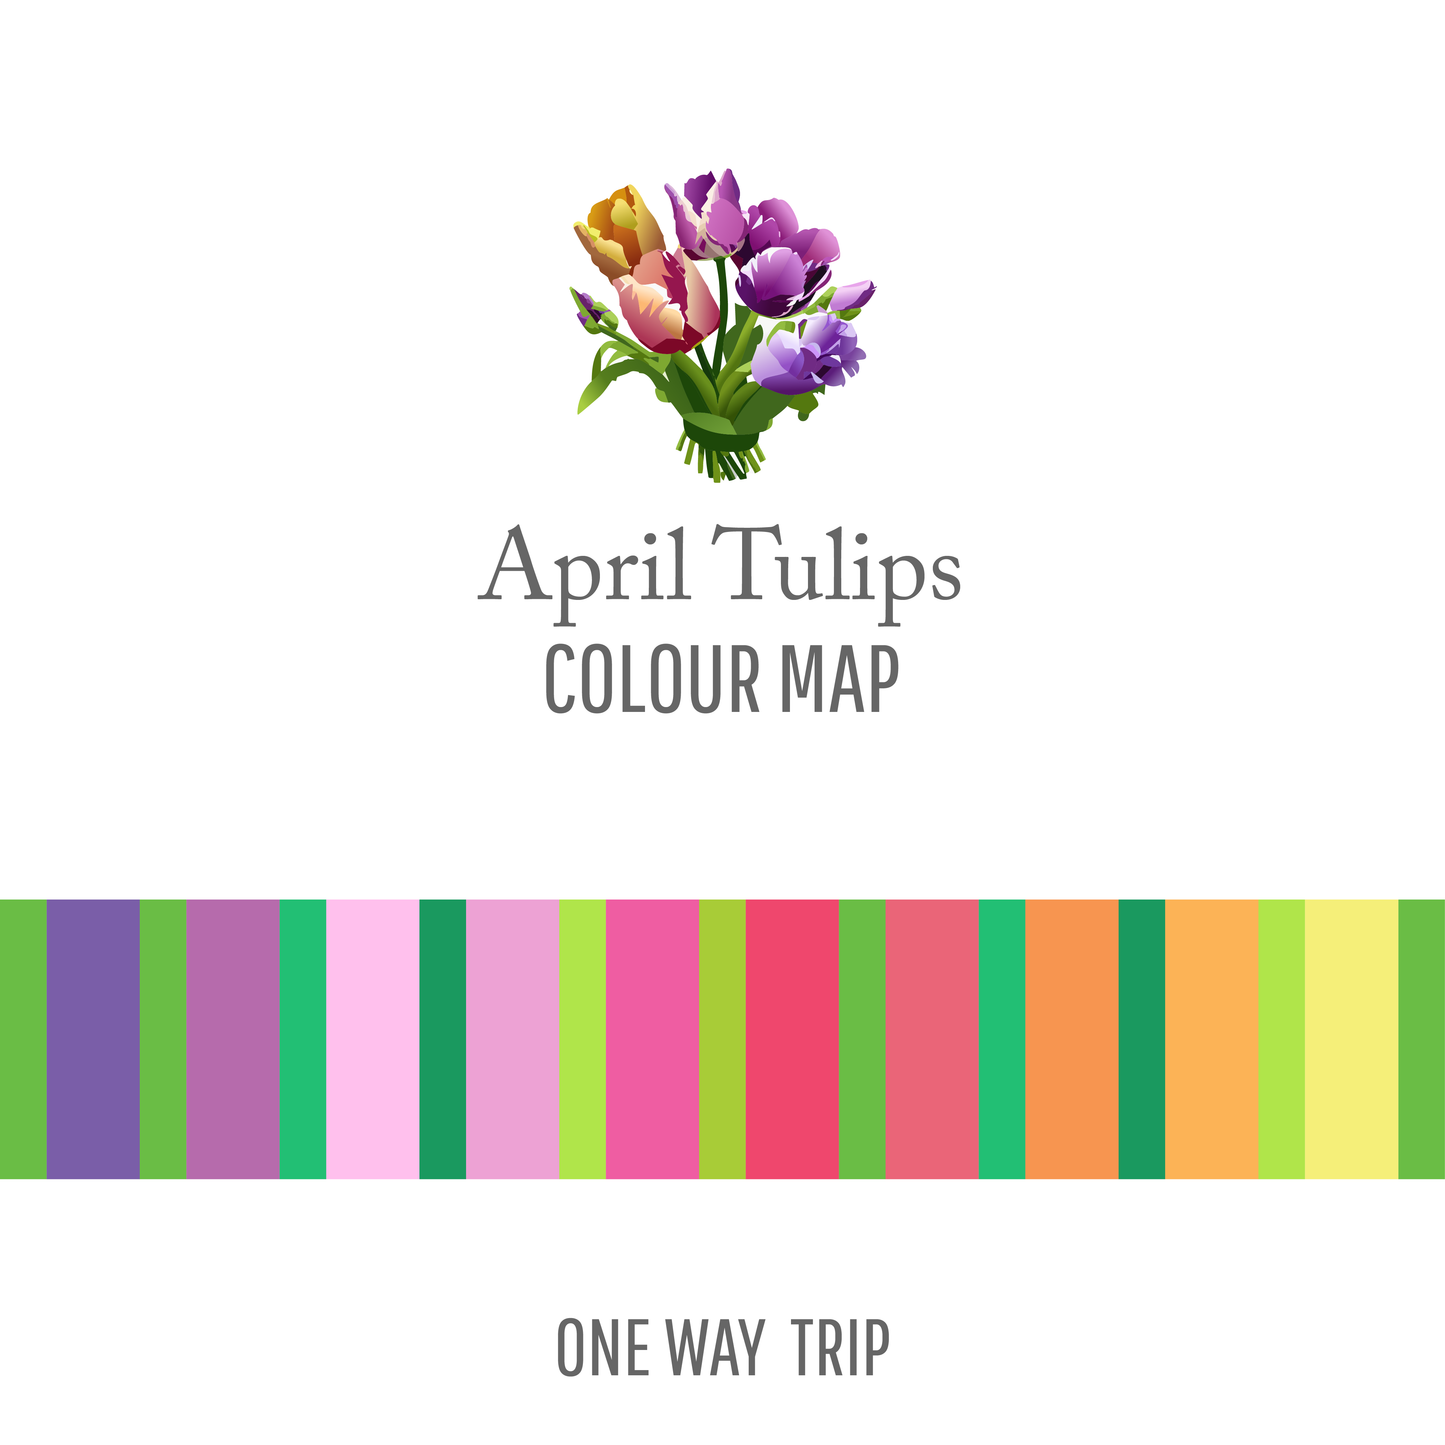 April Tulips: One Way Trip